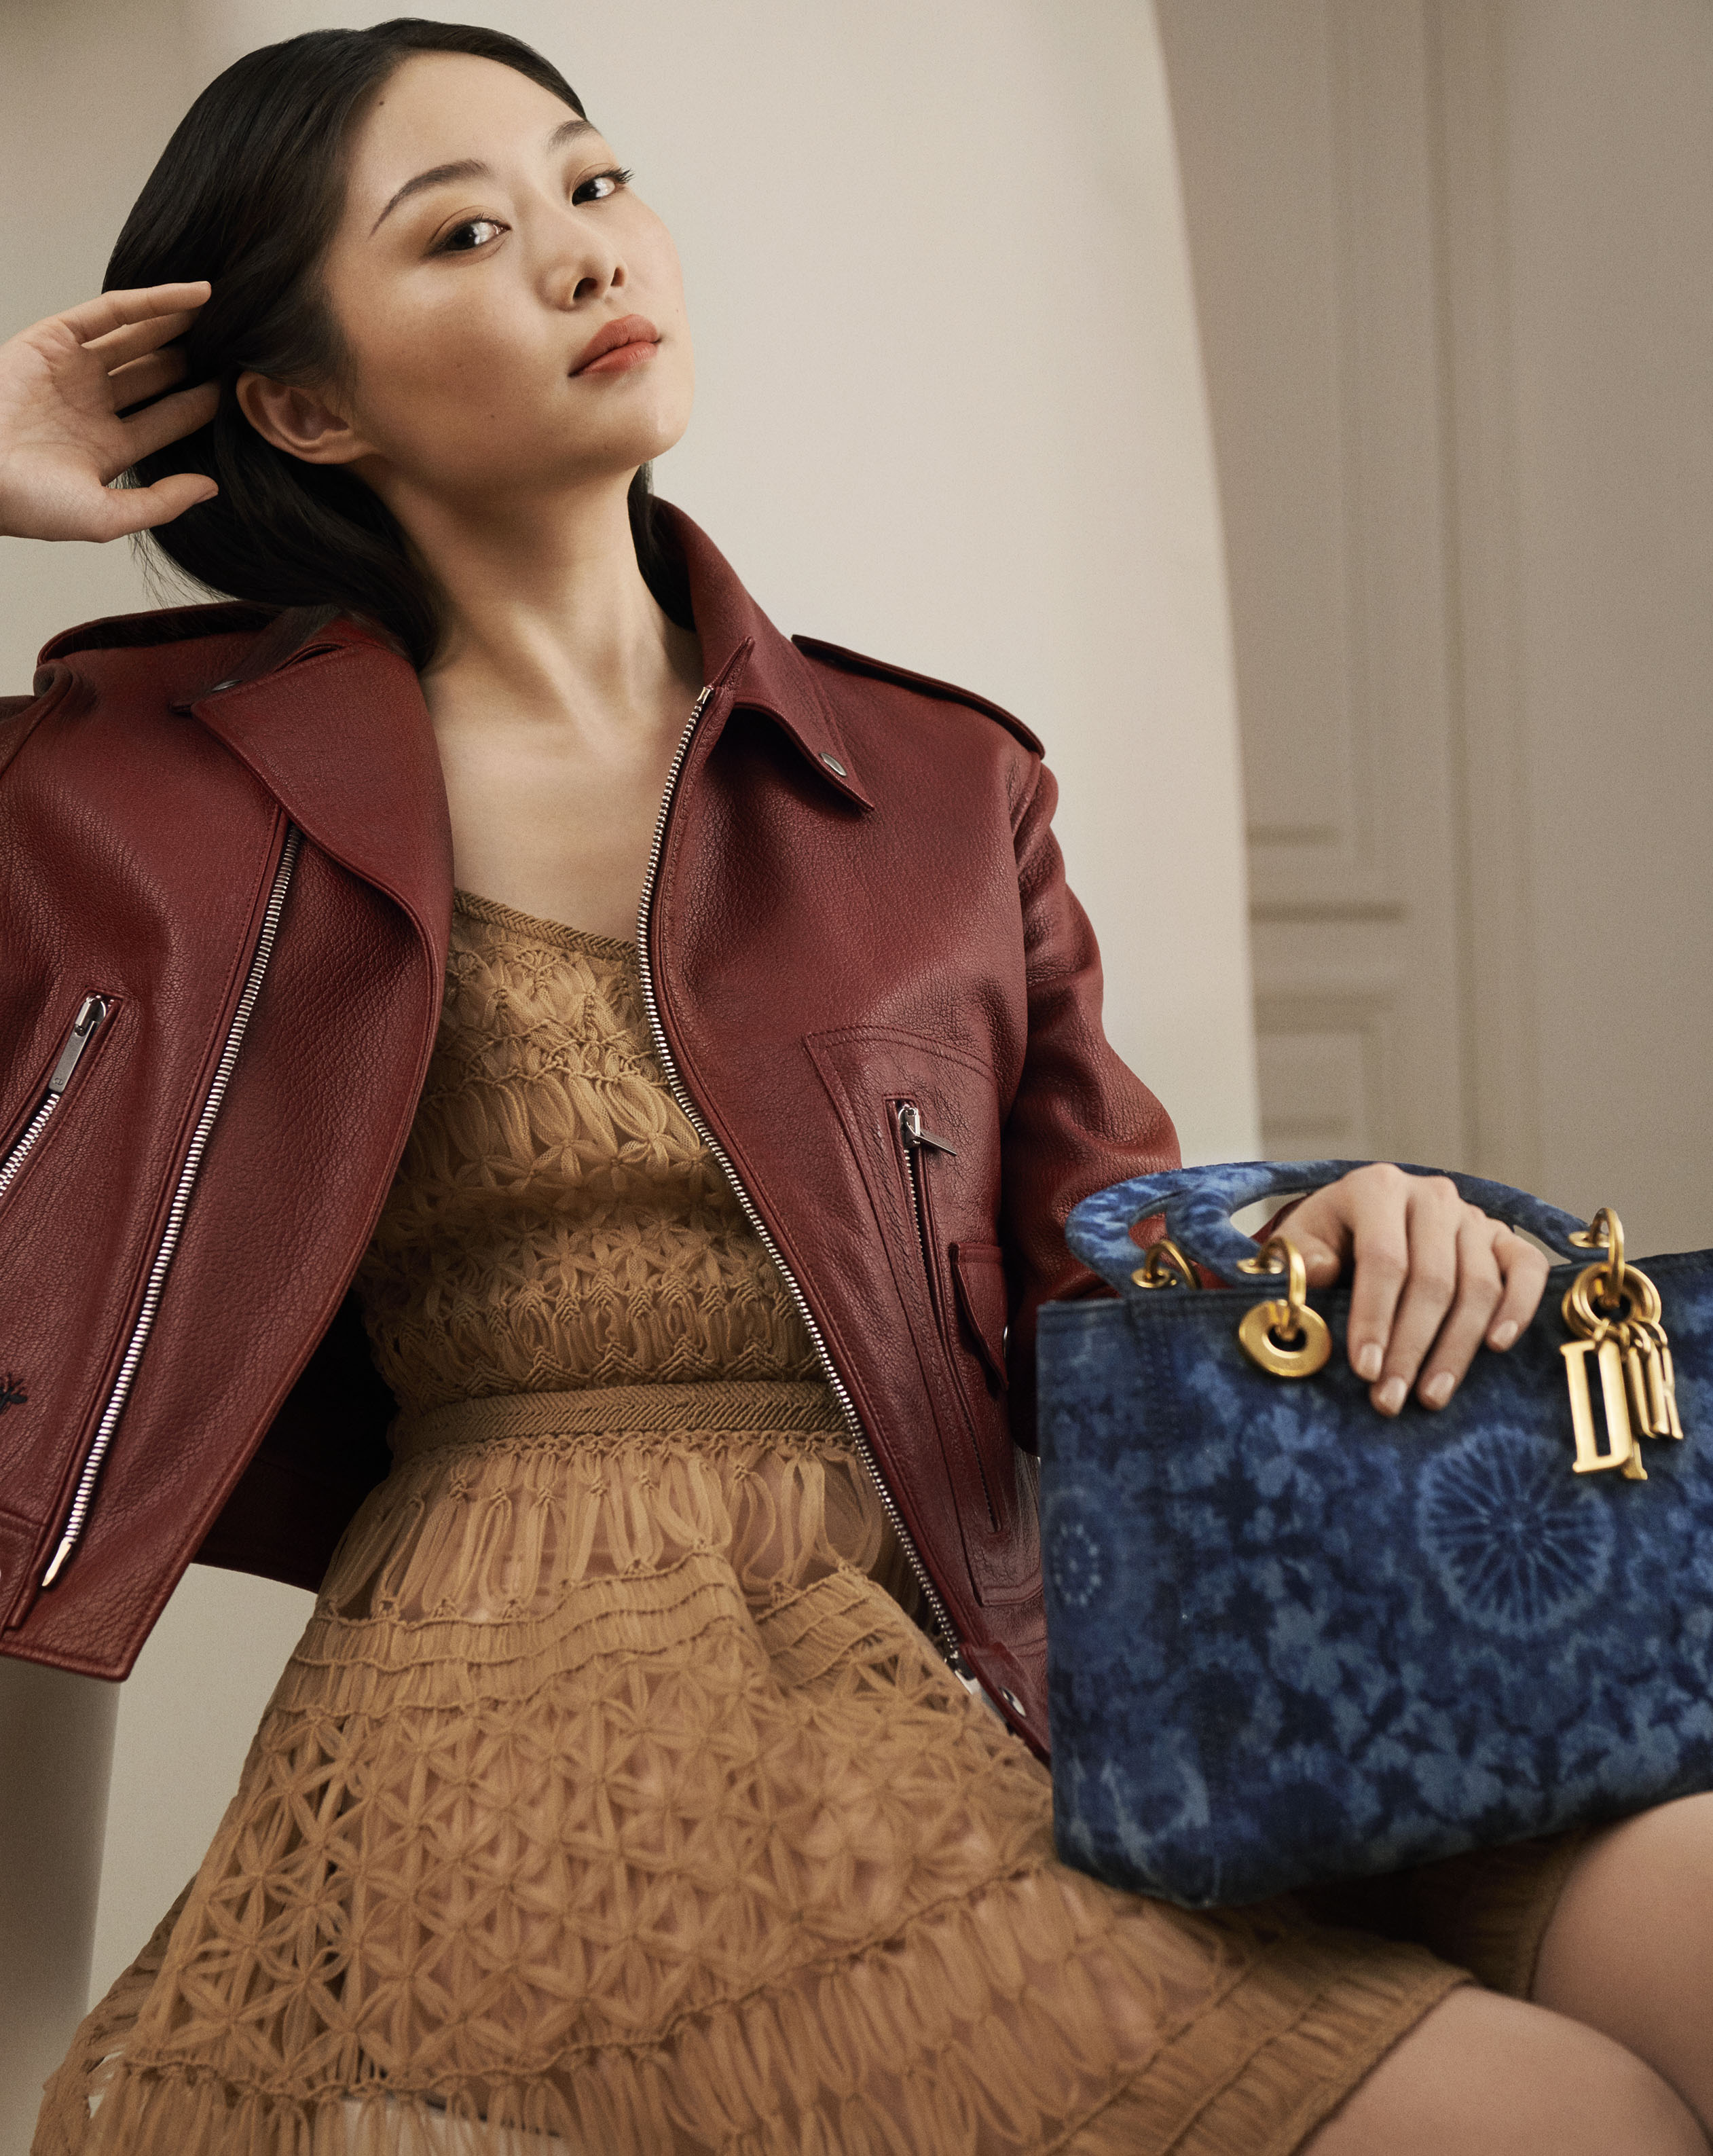 Dior What's Ladylike Handbag Ad Campaign | The Impression